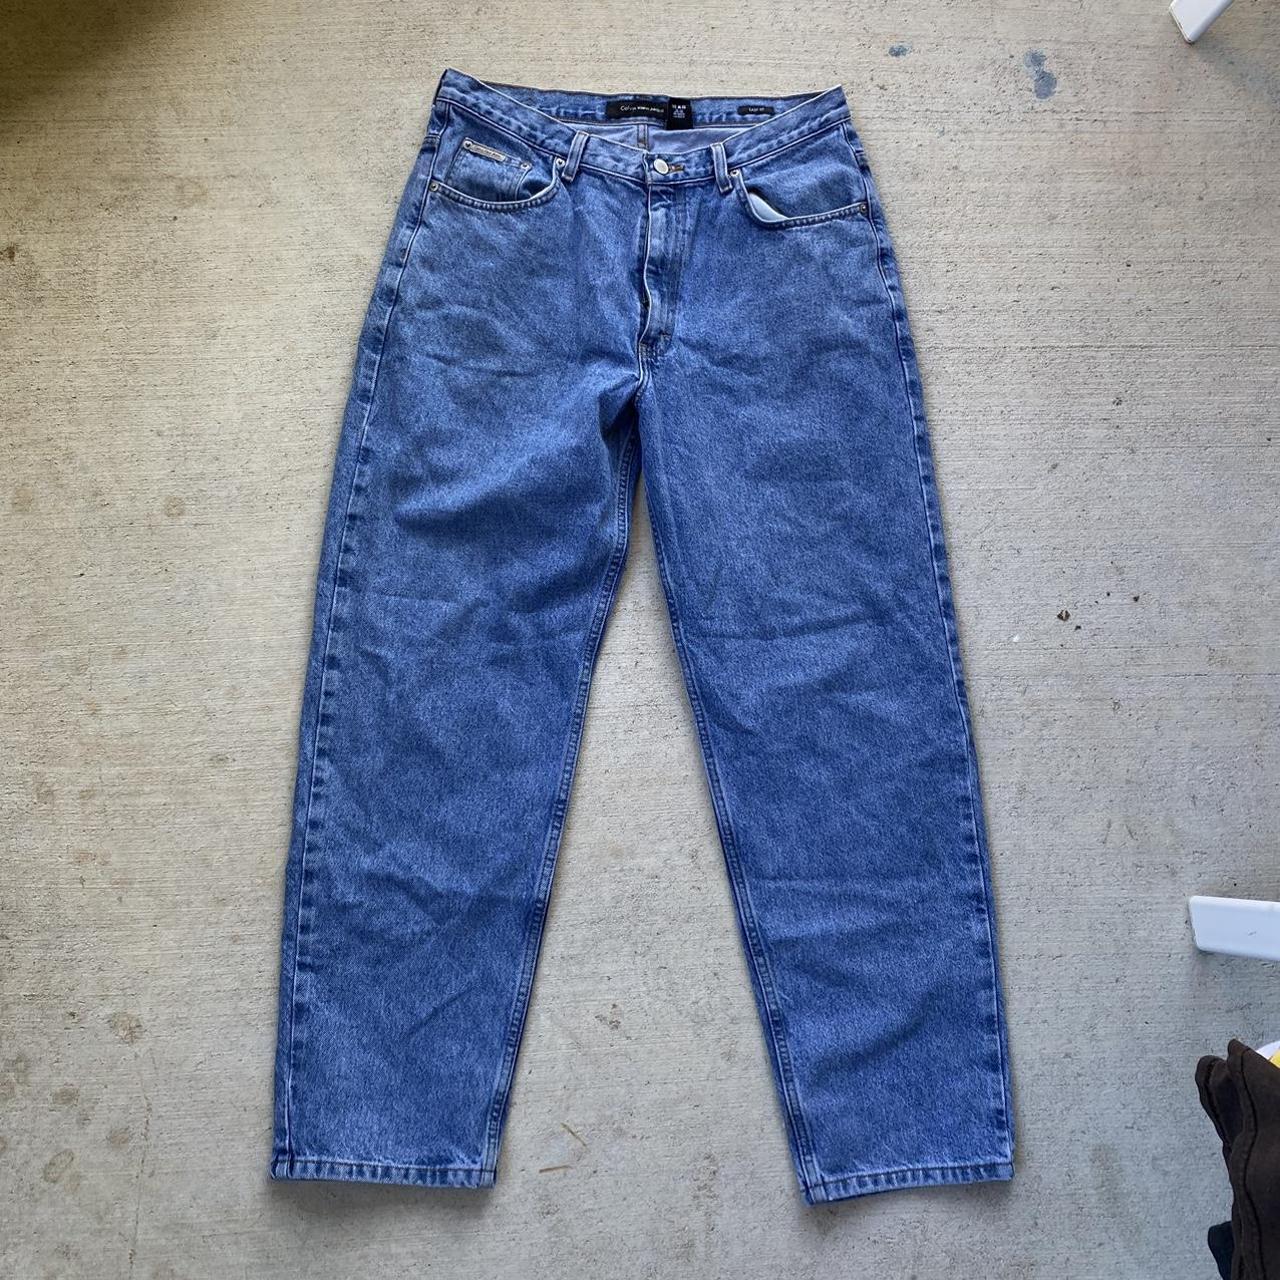 Calvin Klein blue jeans size 34x34 #jeans #calvinklein - Depop